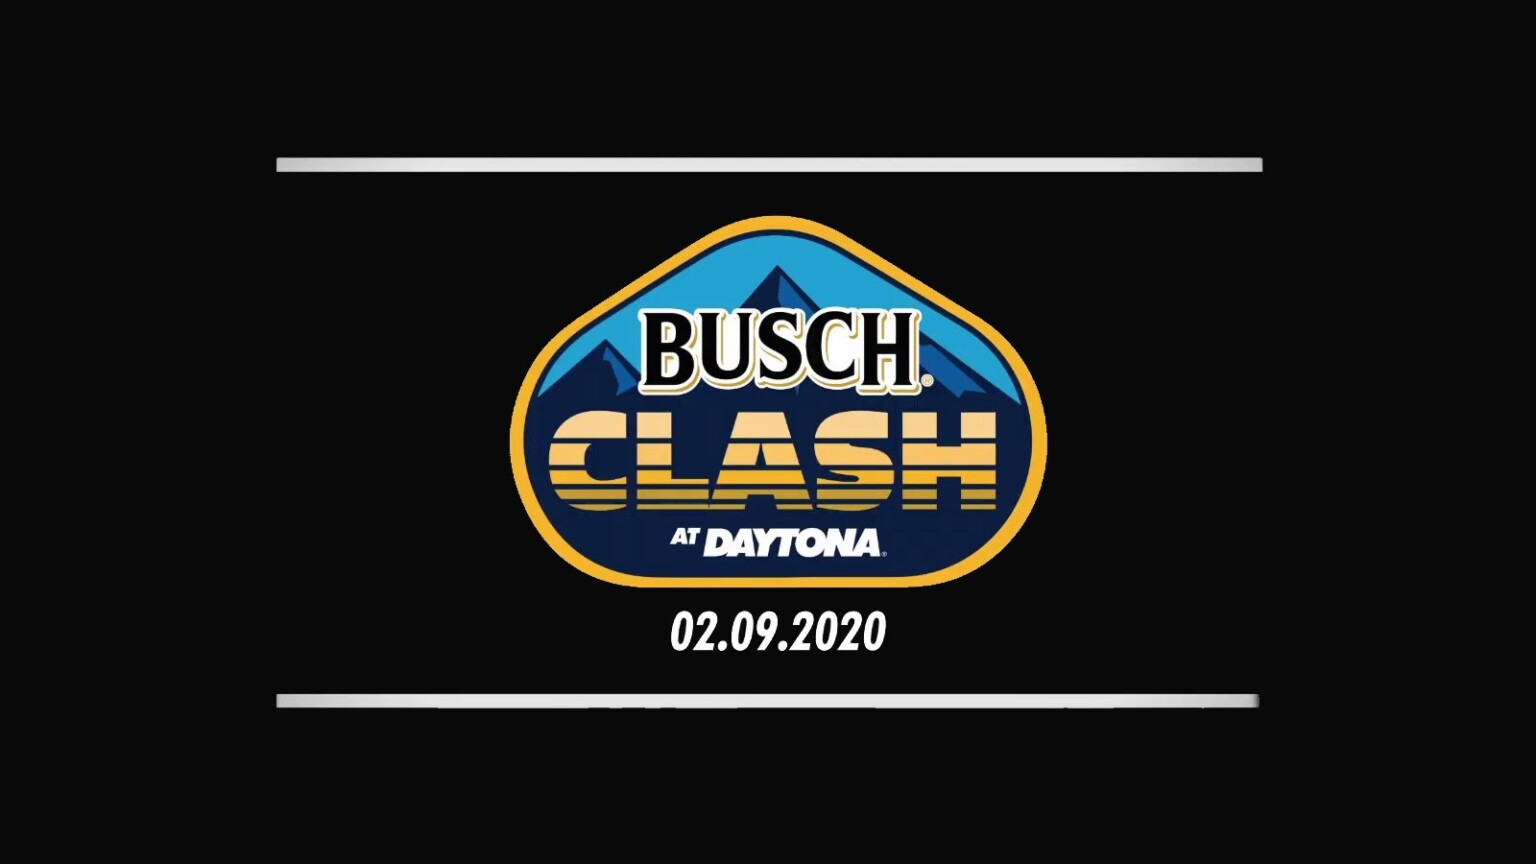 How to Watch the '2020 Busch Clash' Online Live Stream NASCAR